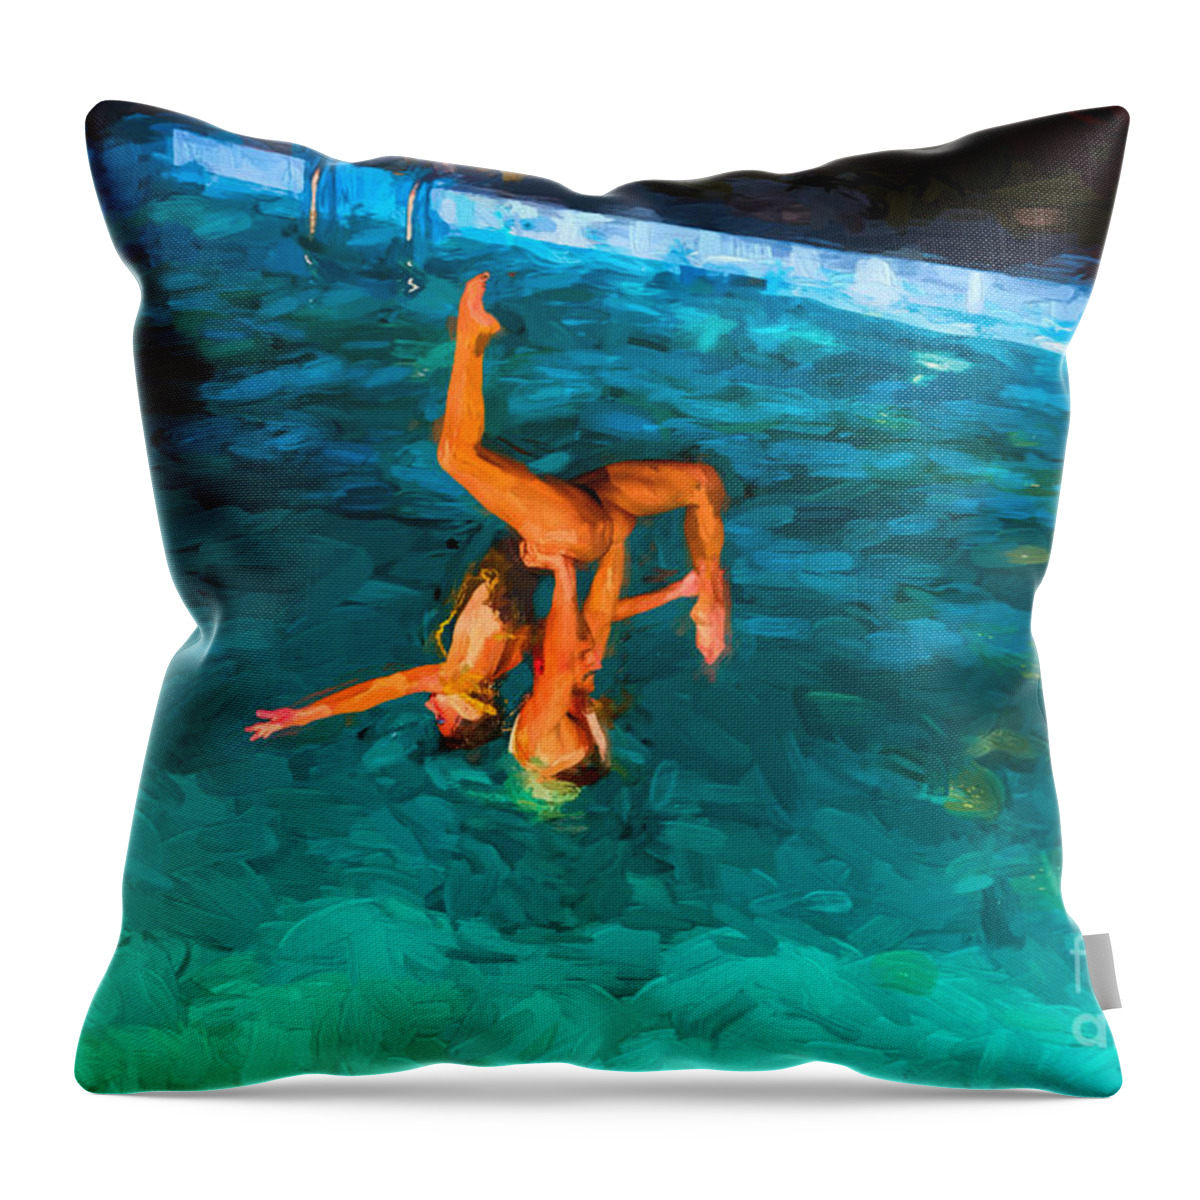 Dancers Throw Pillow featuring the photograph Aqua Dancers by Les Palenik